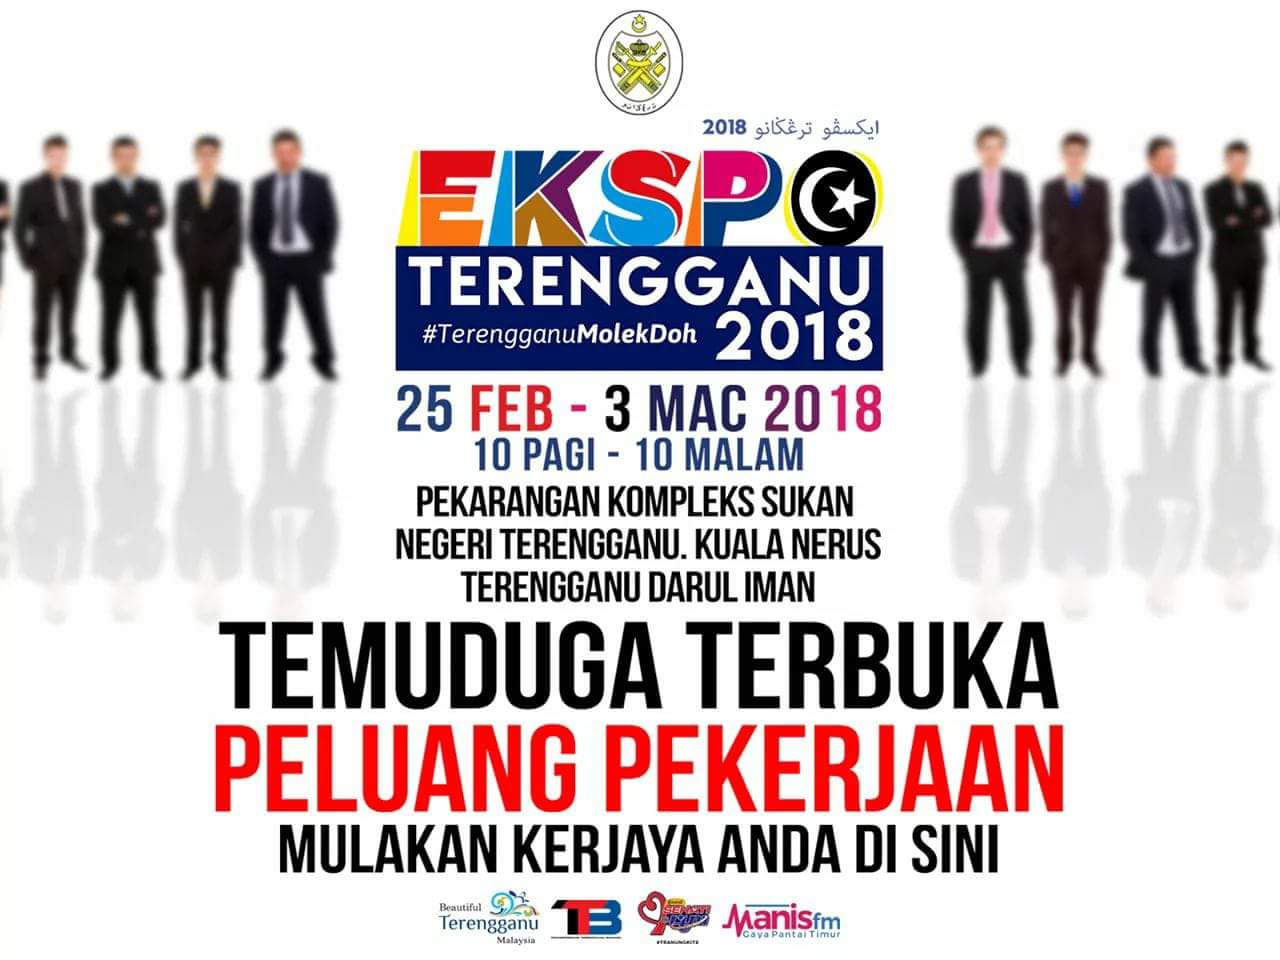 Ekspo Terengganu 2018